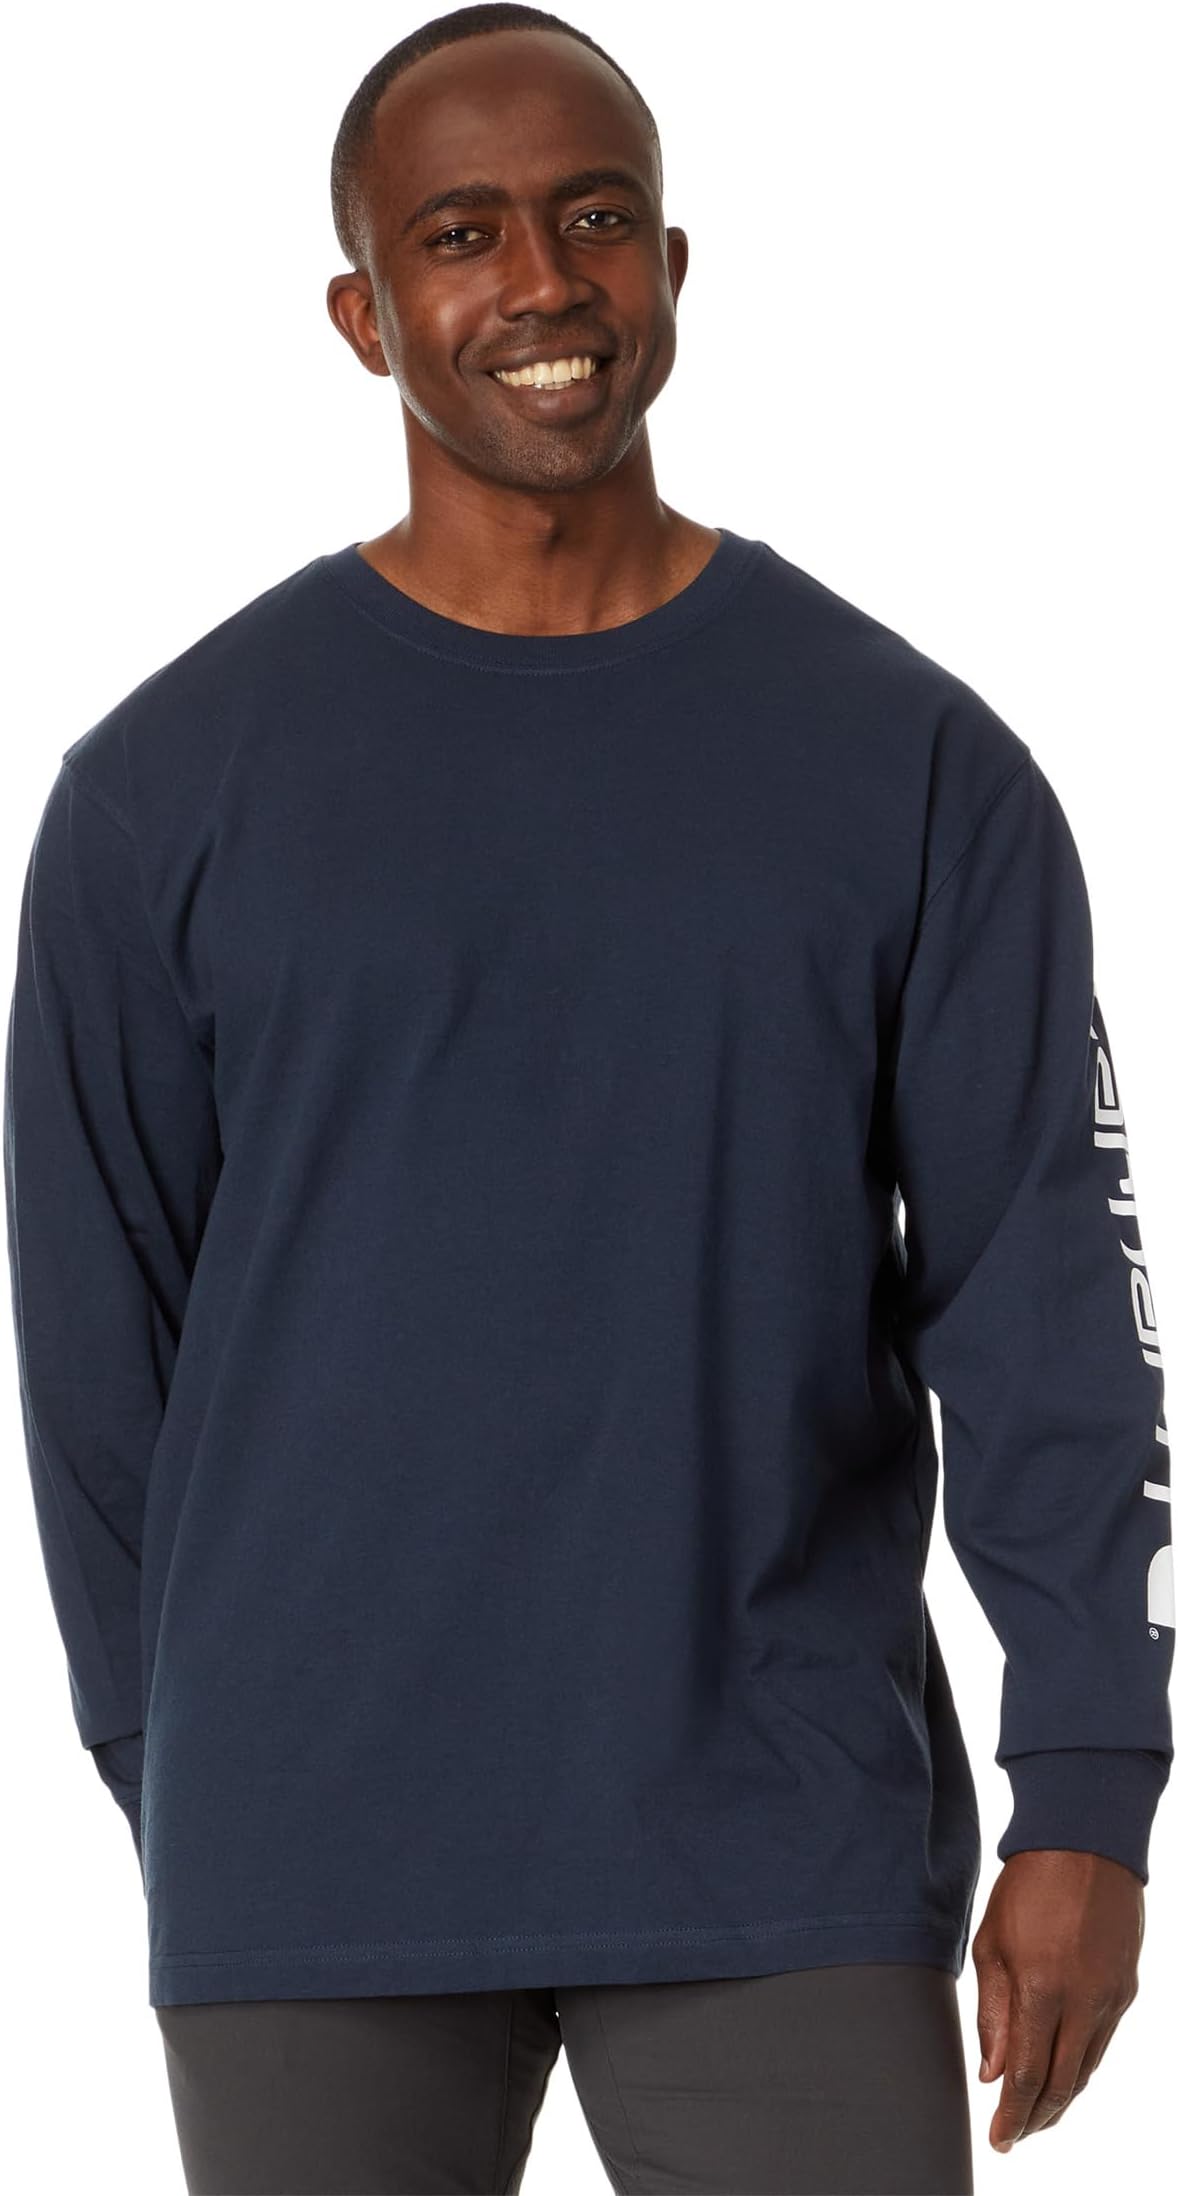 Футболка L/S с фирменным логотипом на рукавах Carhartt, темно-синий футболка с фирменным логотипом s s carhartt цвет marmalade heather